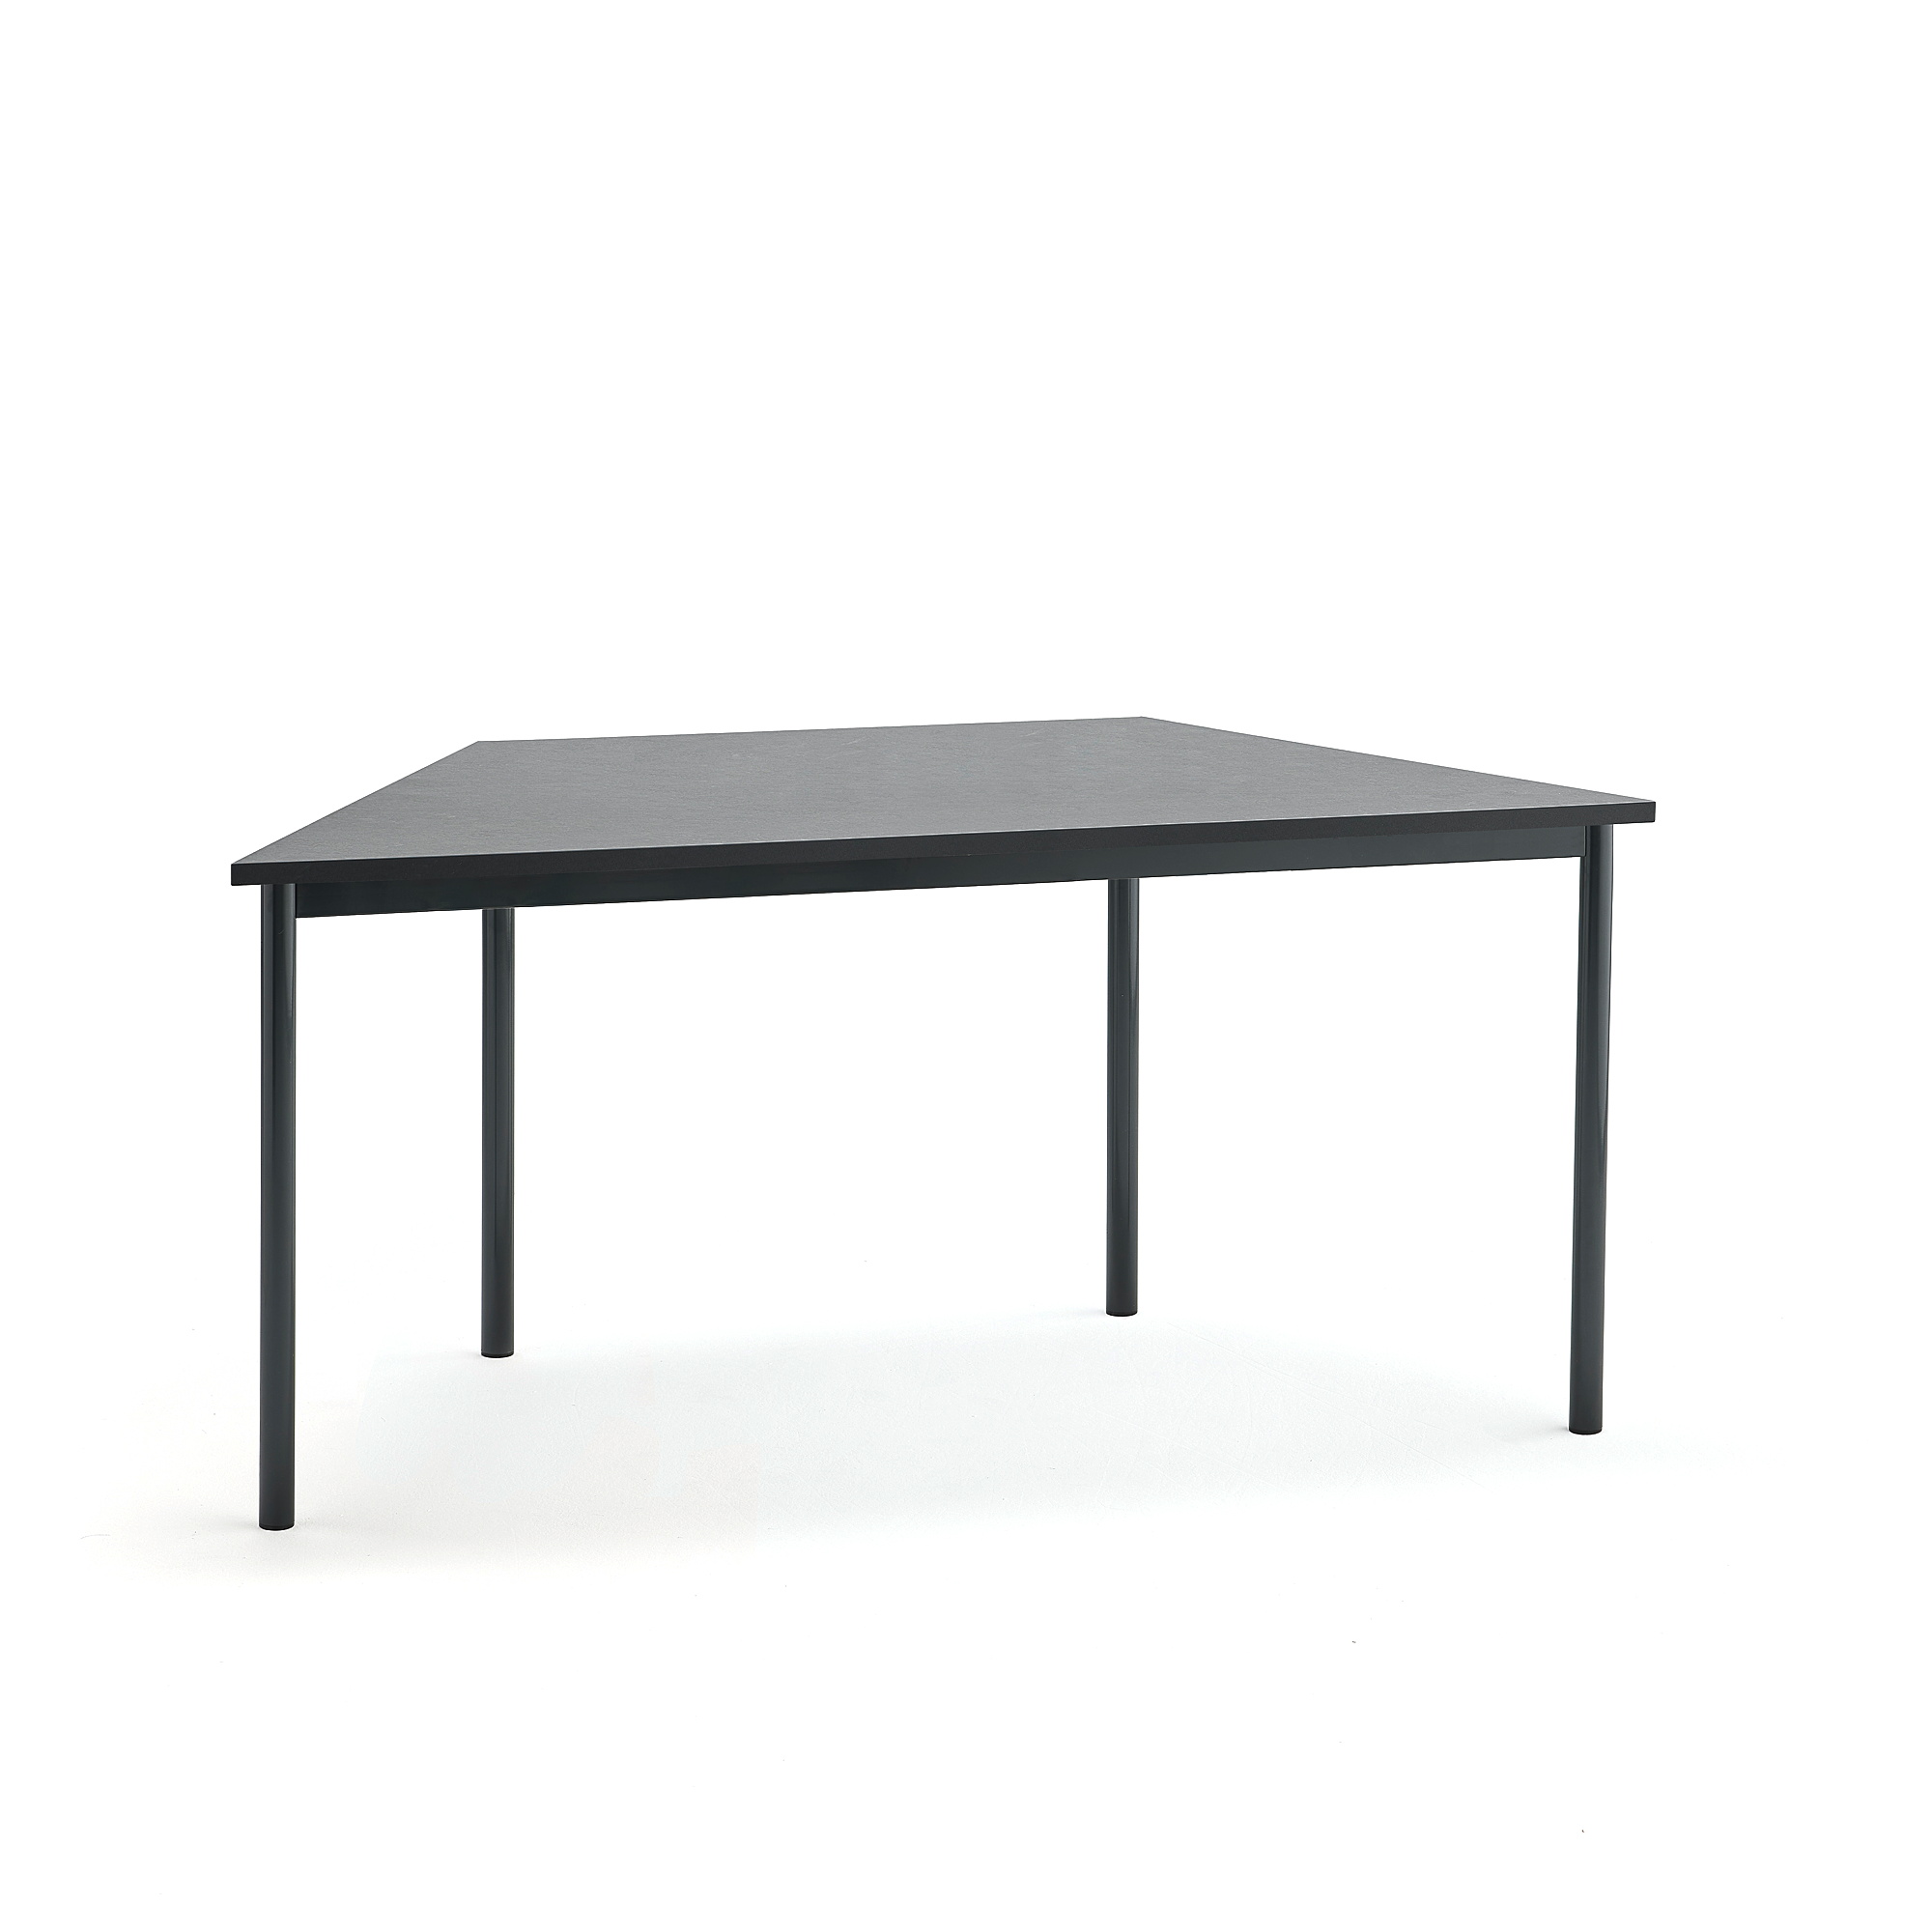 Stůl SONITUS TRAPETS, 1600x800x720 mm, antracitově šedé nohy, deska s linoleem, tmavě šedá